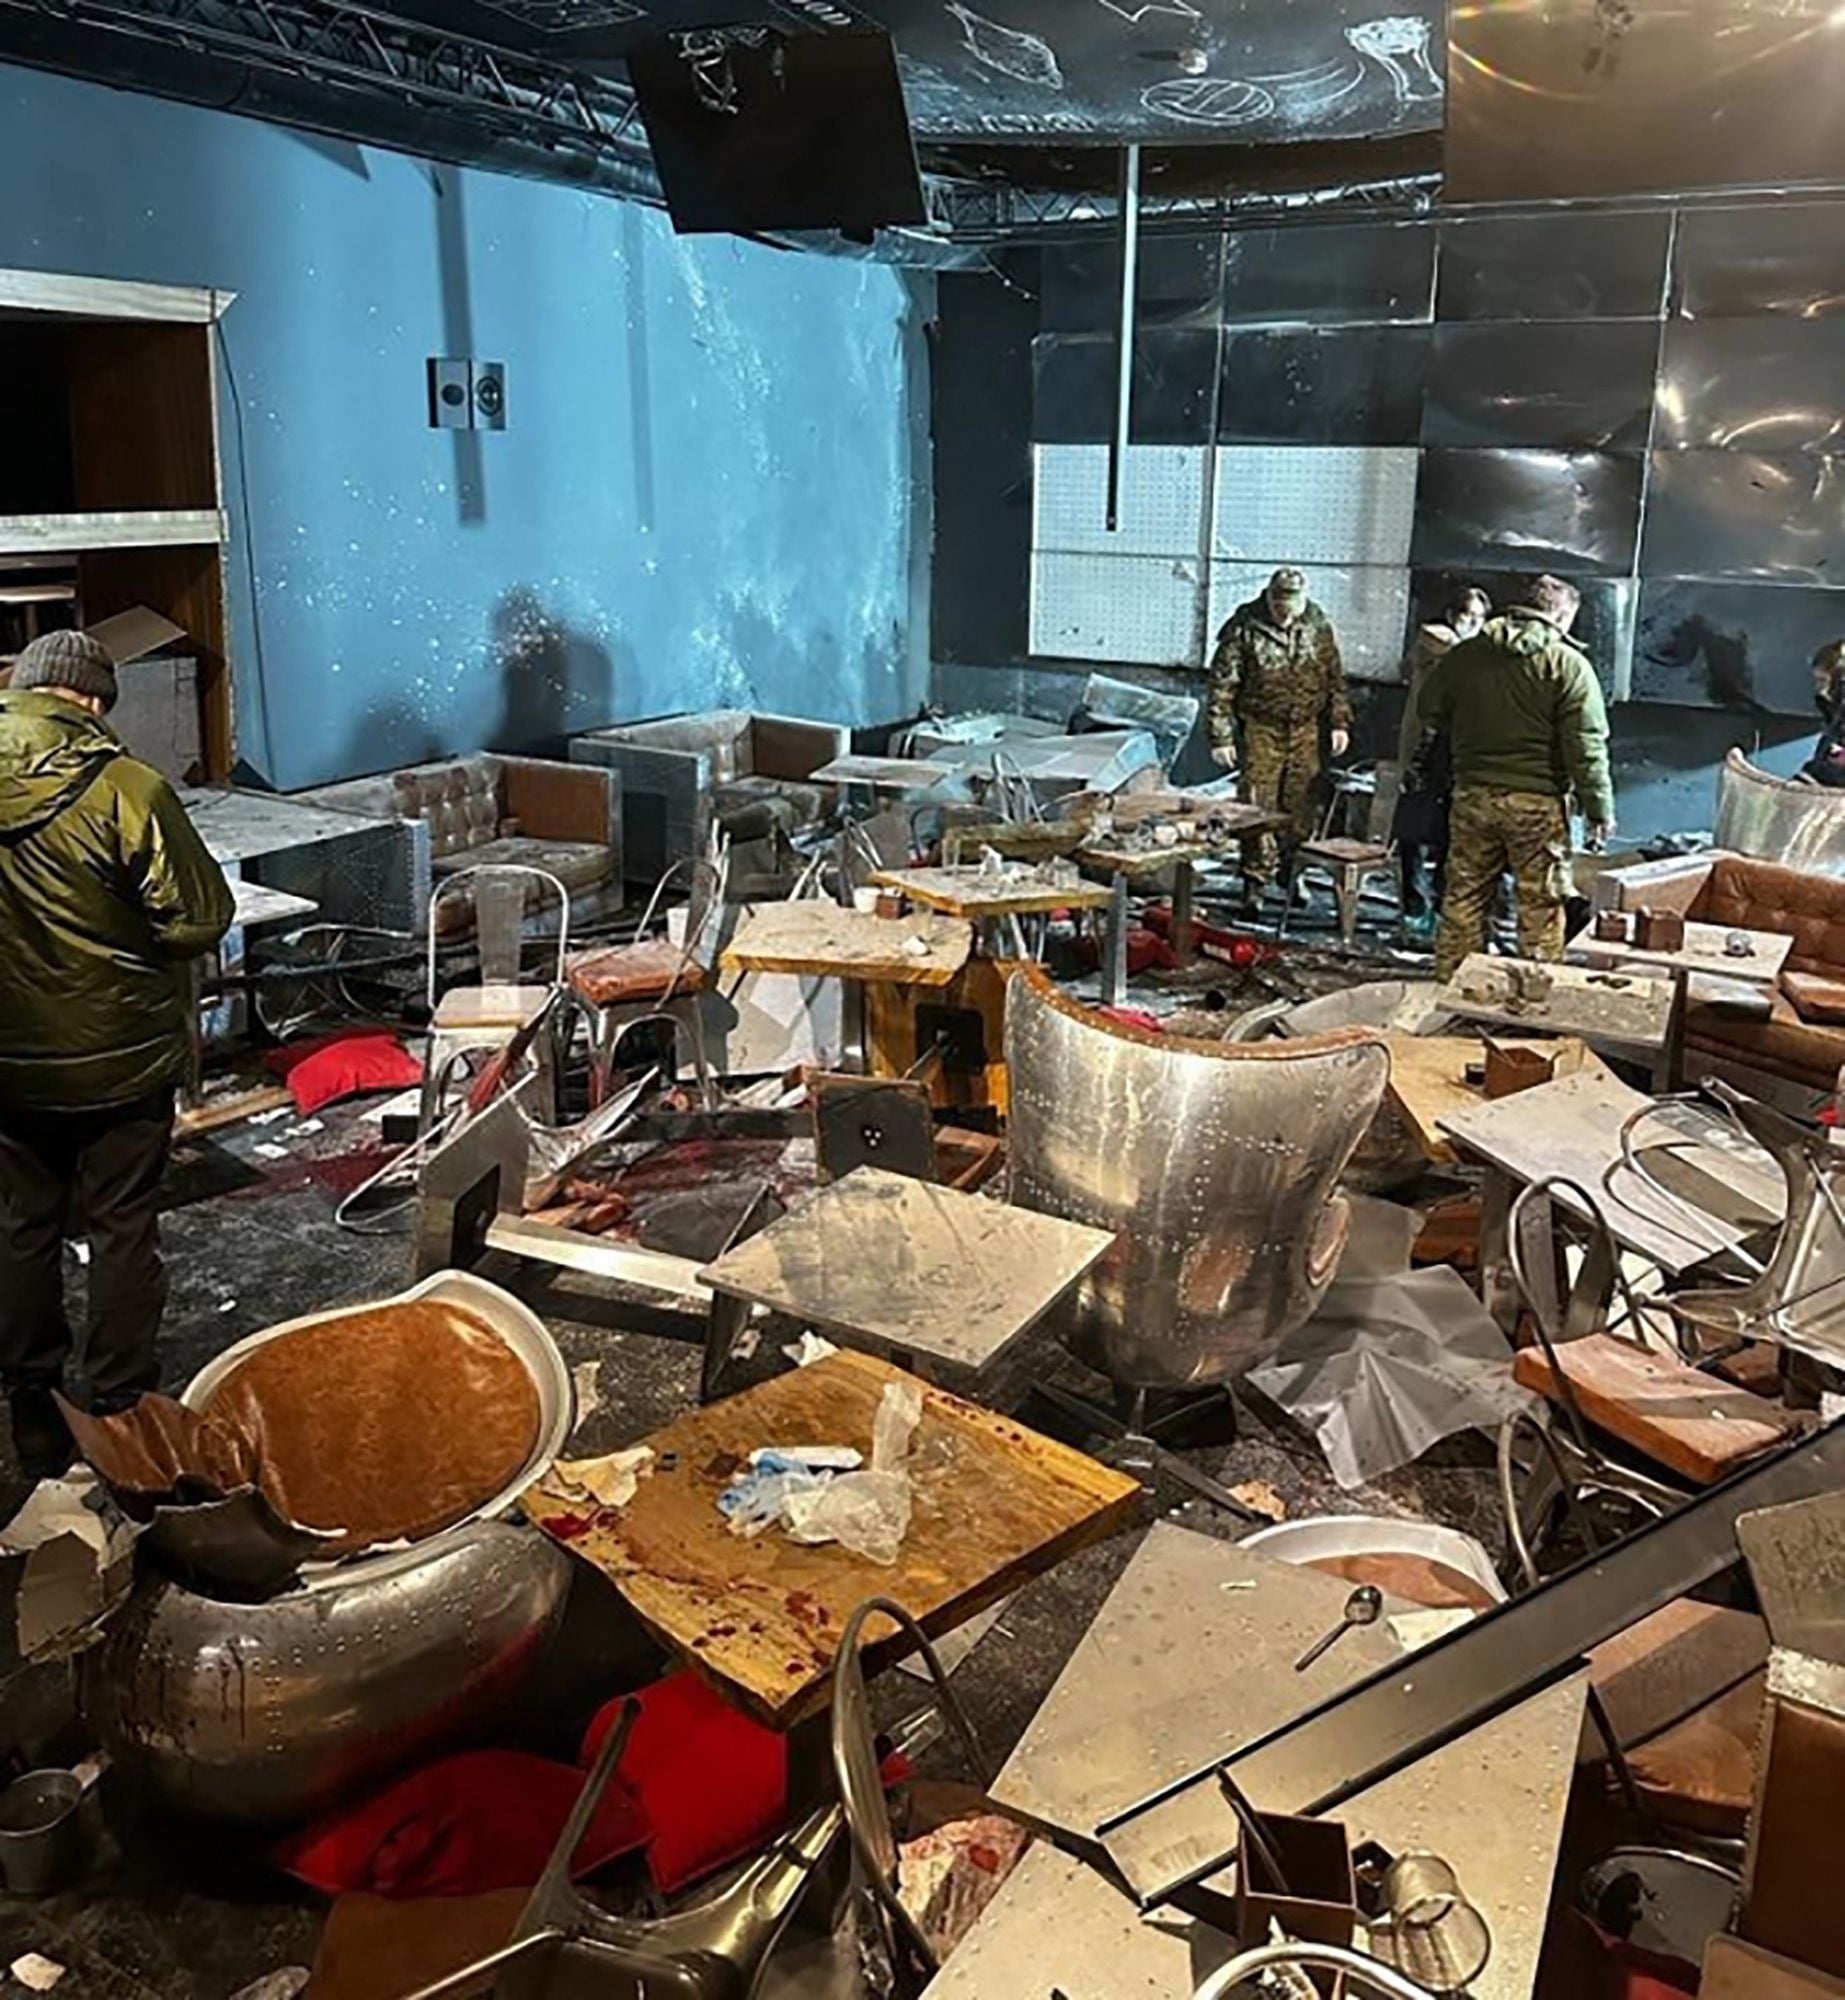 Inspectores rusos exploran la escena del café explotado